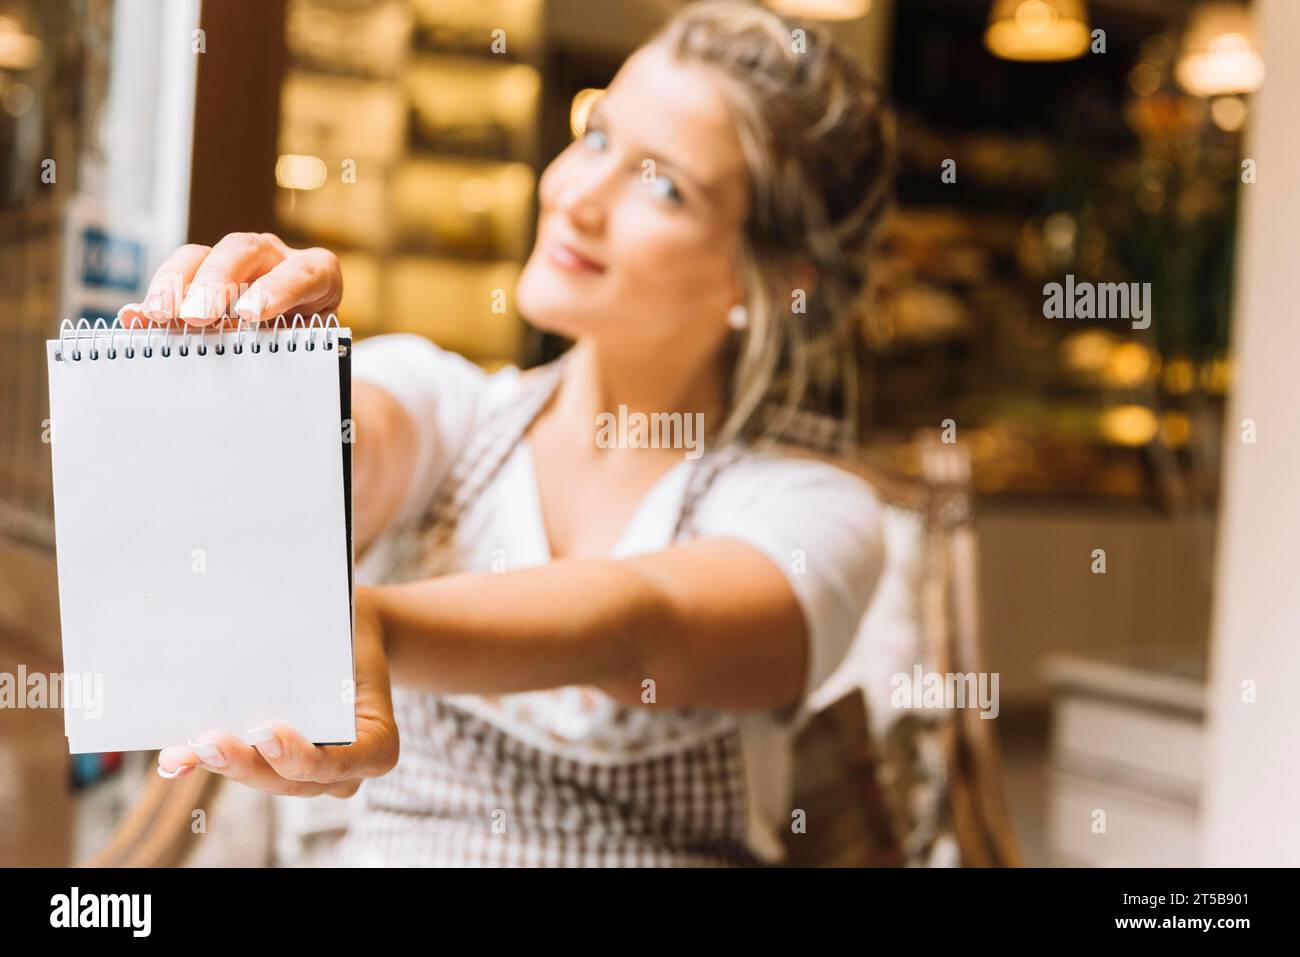 Waitress showing notebook Stock Photo